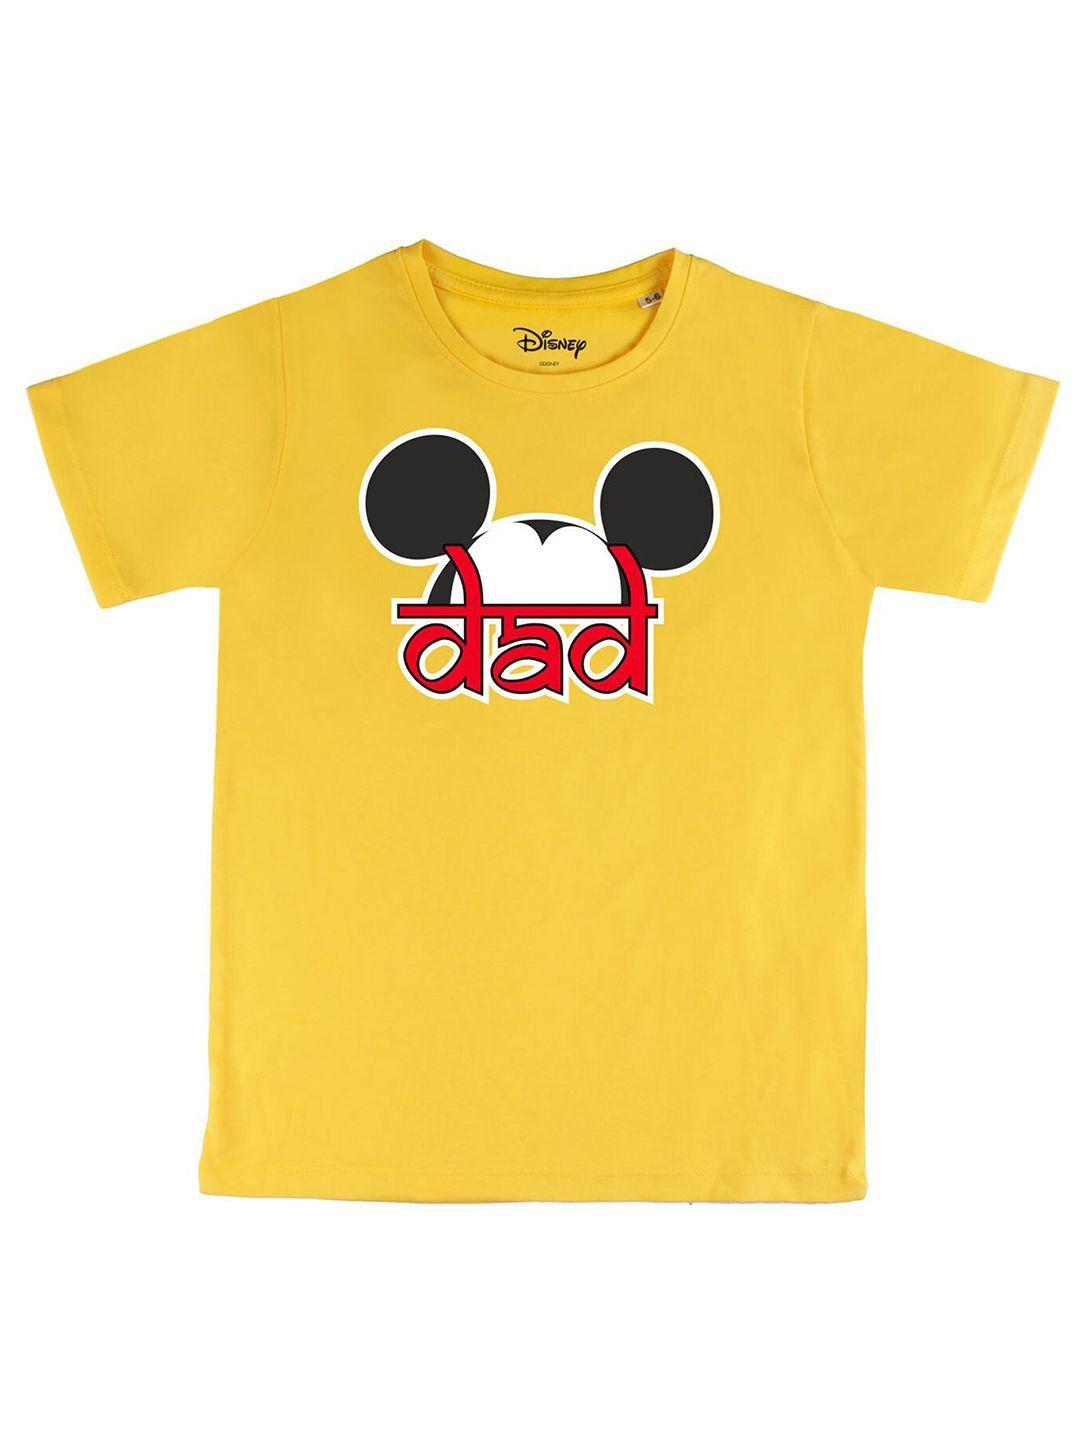 disney-by-wear-your-mind-boys-yellow-disney-printed-t-shirt